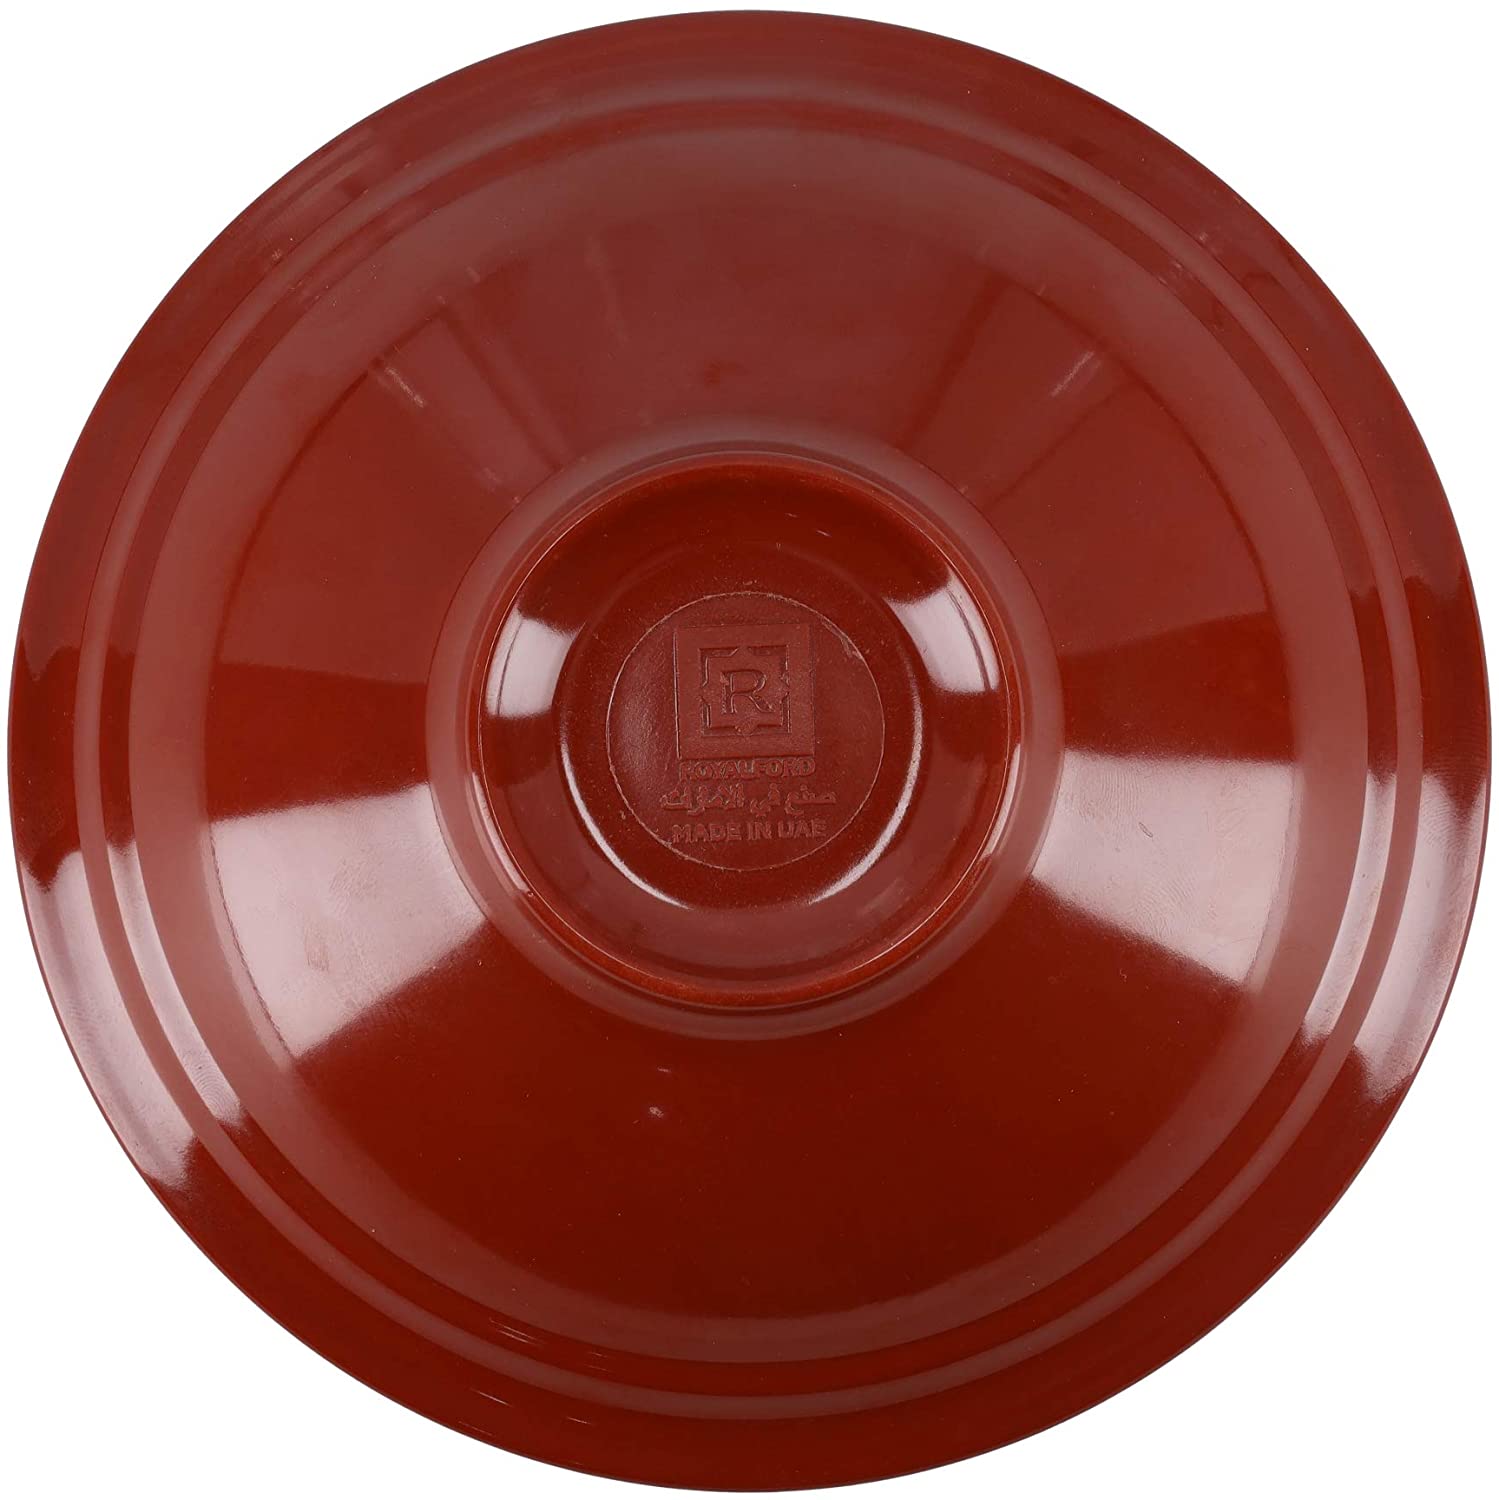 Royalford 5 inch Melamin Ware Hummus Bowl - Red and White RF9882